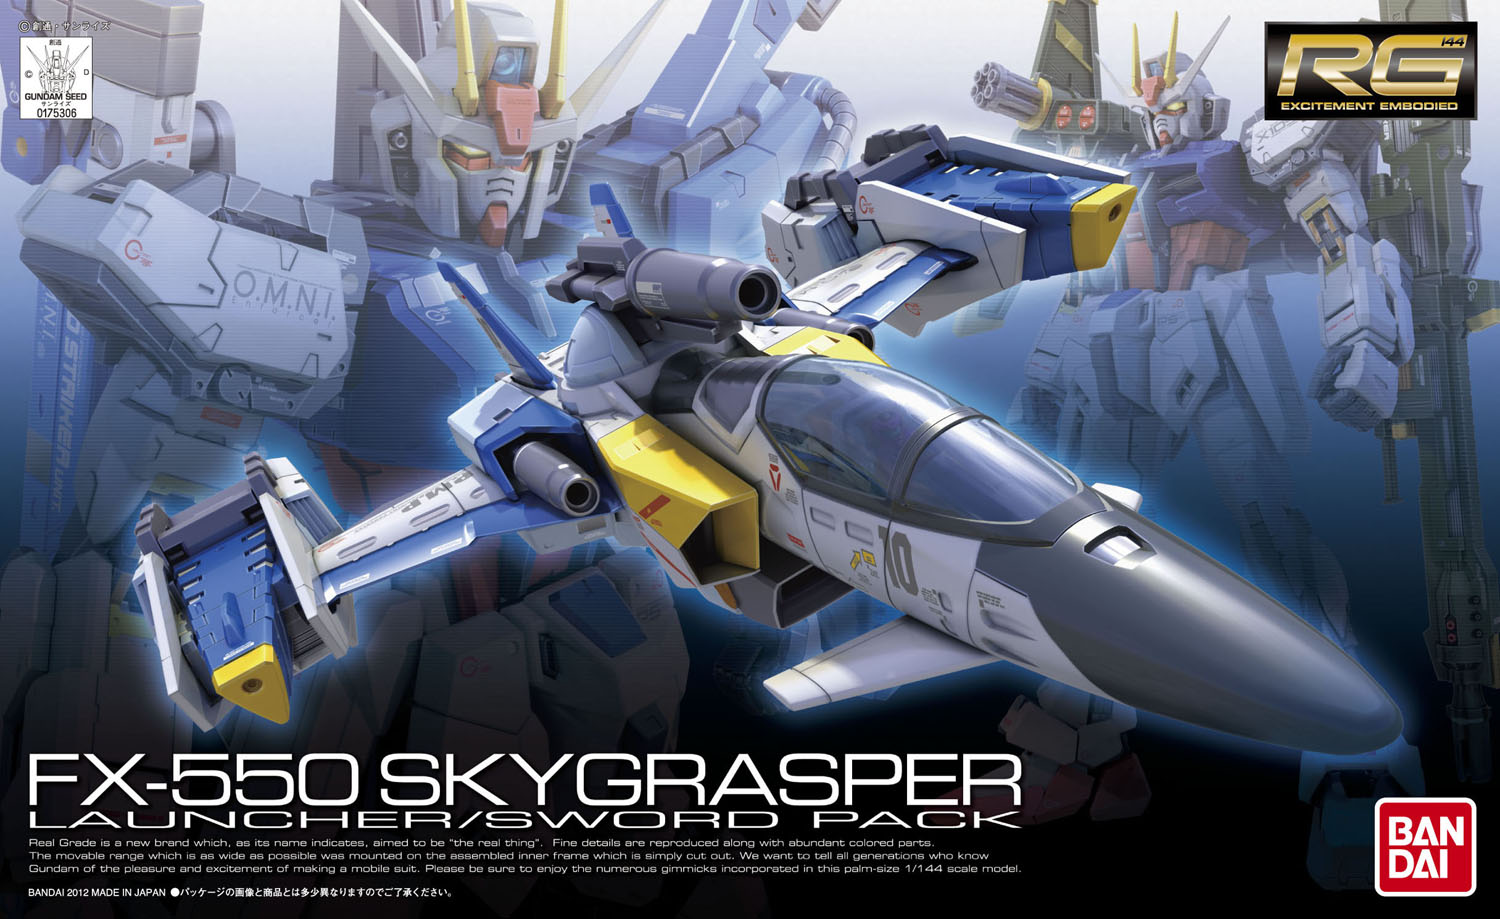 for RG 1/144 Gundam FX-550 Sky Grasper Launcher Sword Pack Perfect Strike Decals 